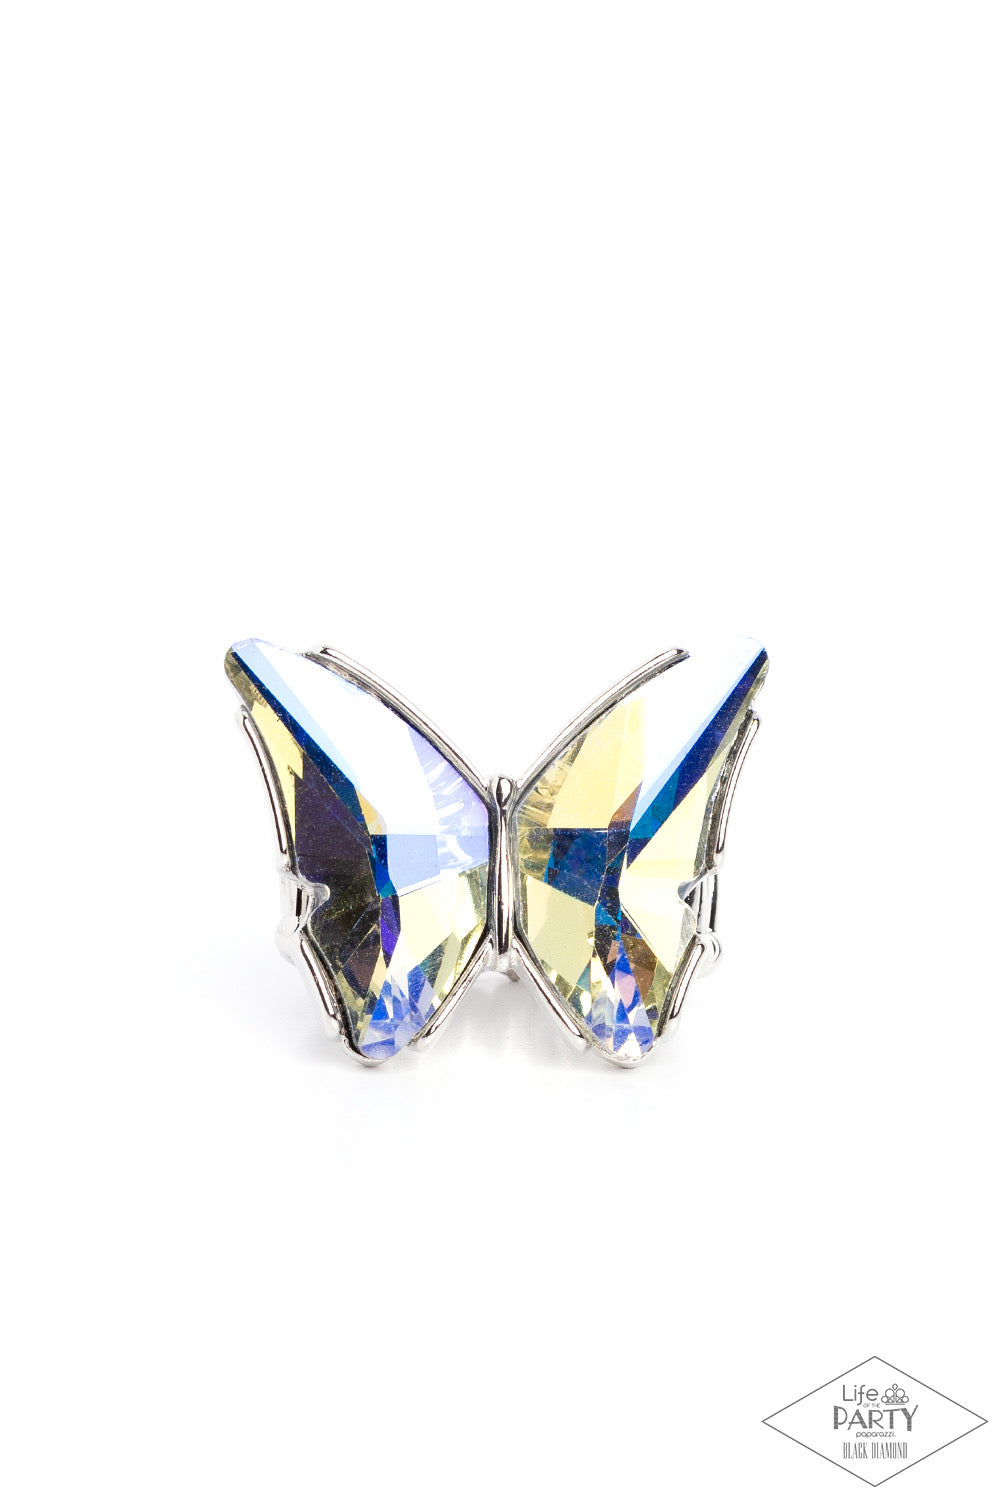 Butterfly Jewelry - Paparazzi Fluorescent Flutter - Iridescent Ring  - Paparazzi Jewelry Images